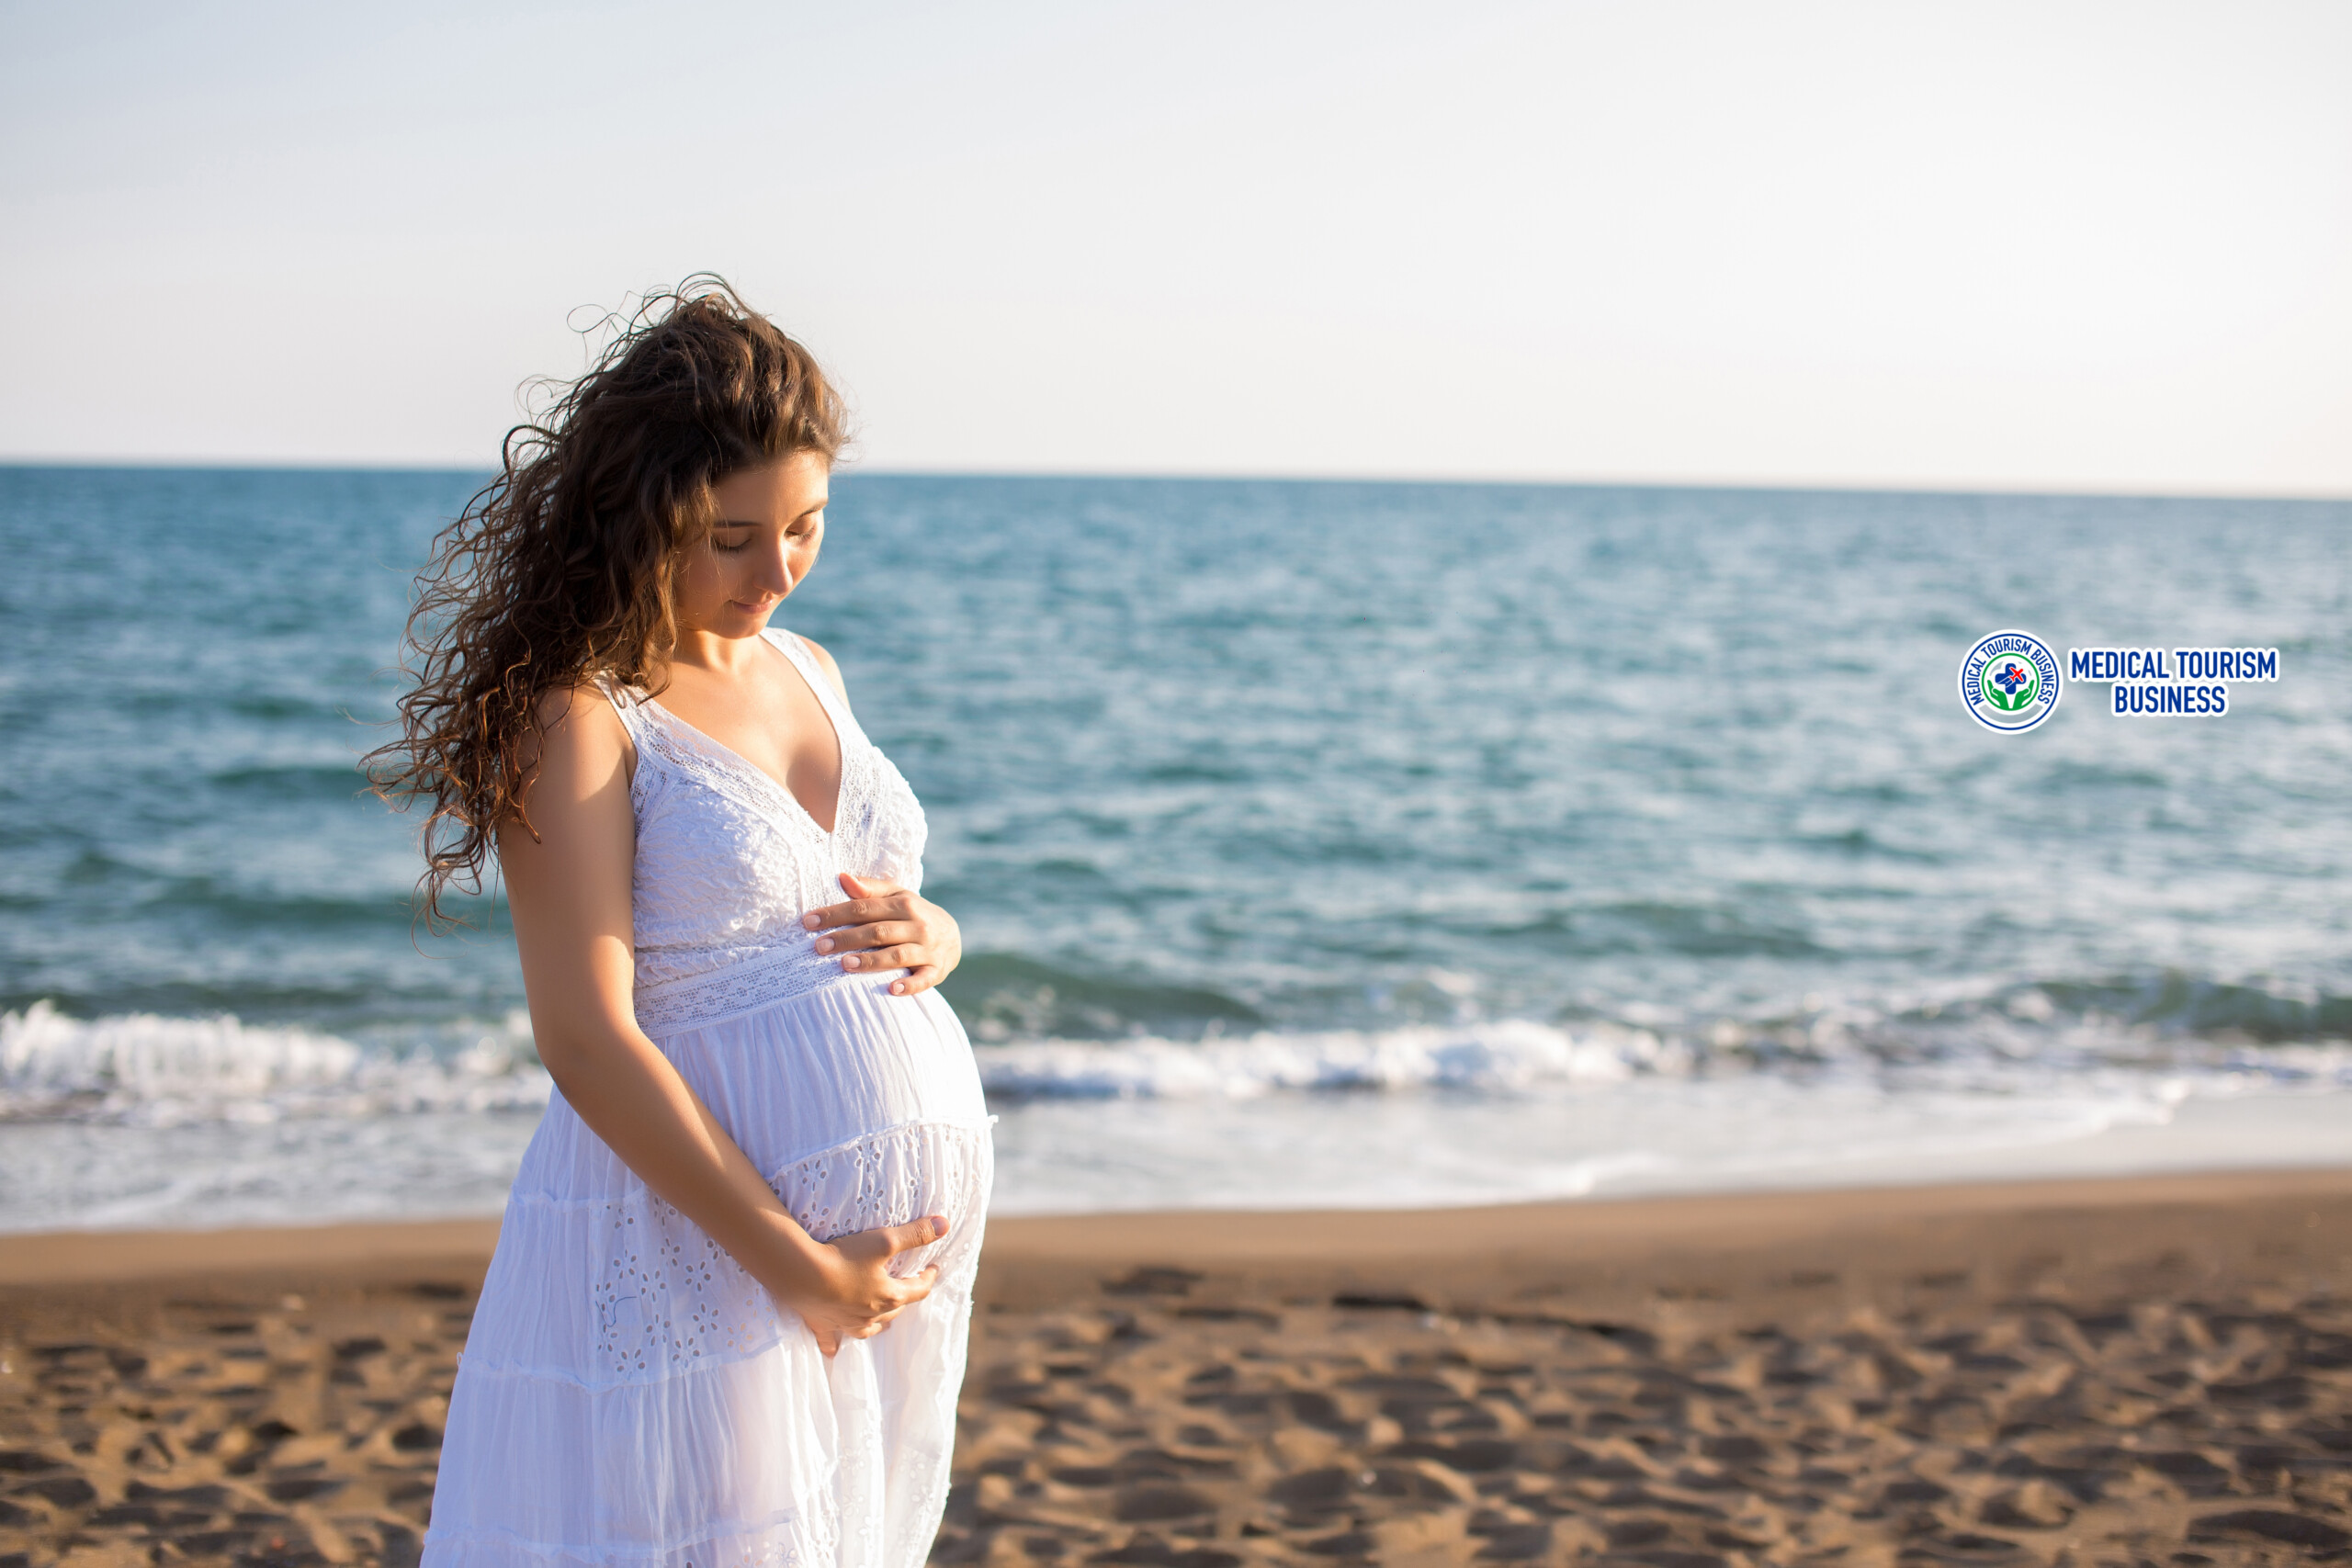 Fertility Treatment Abroad - Health Tourism